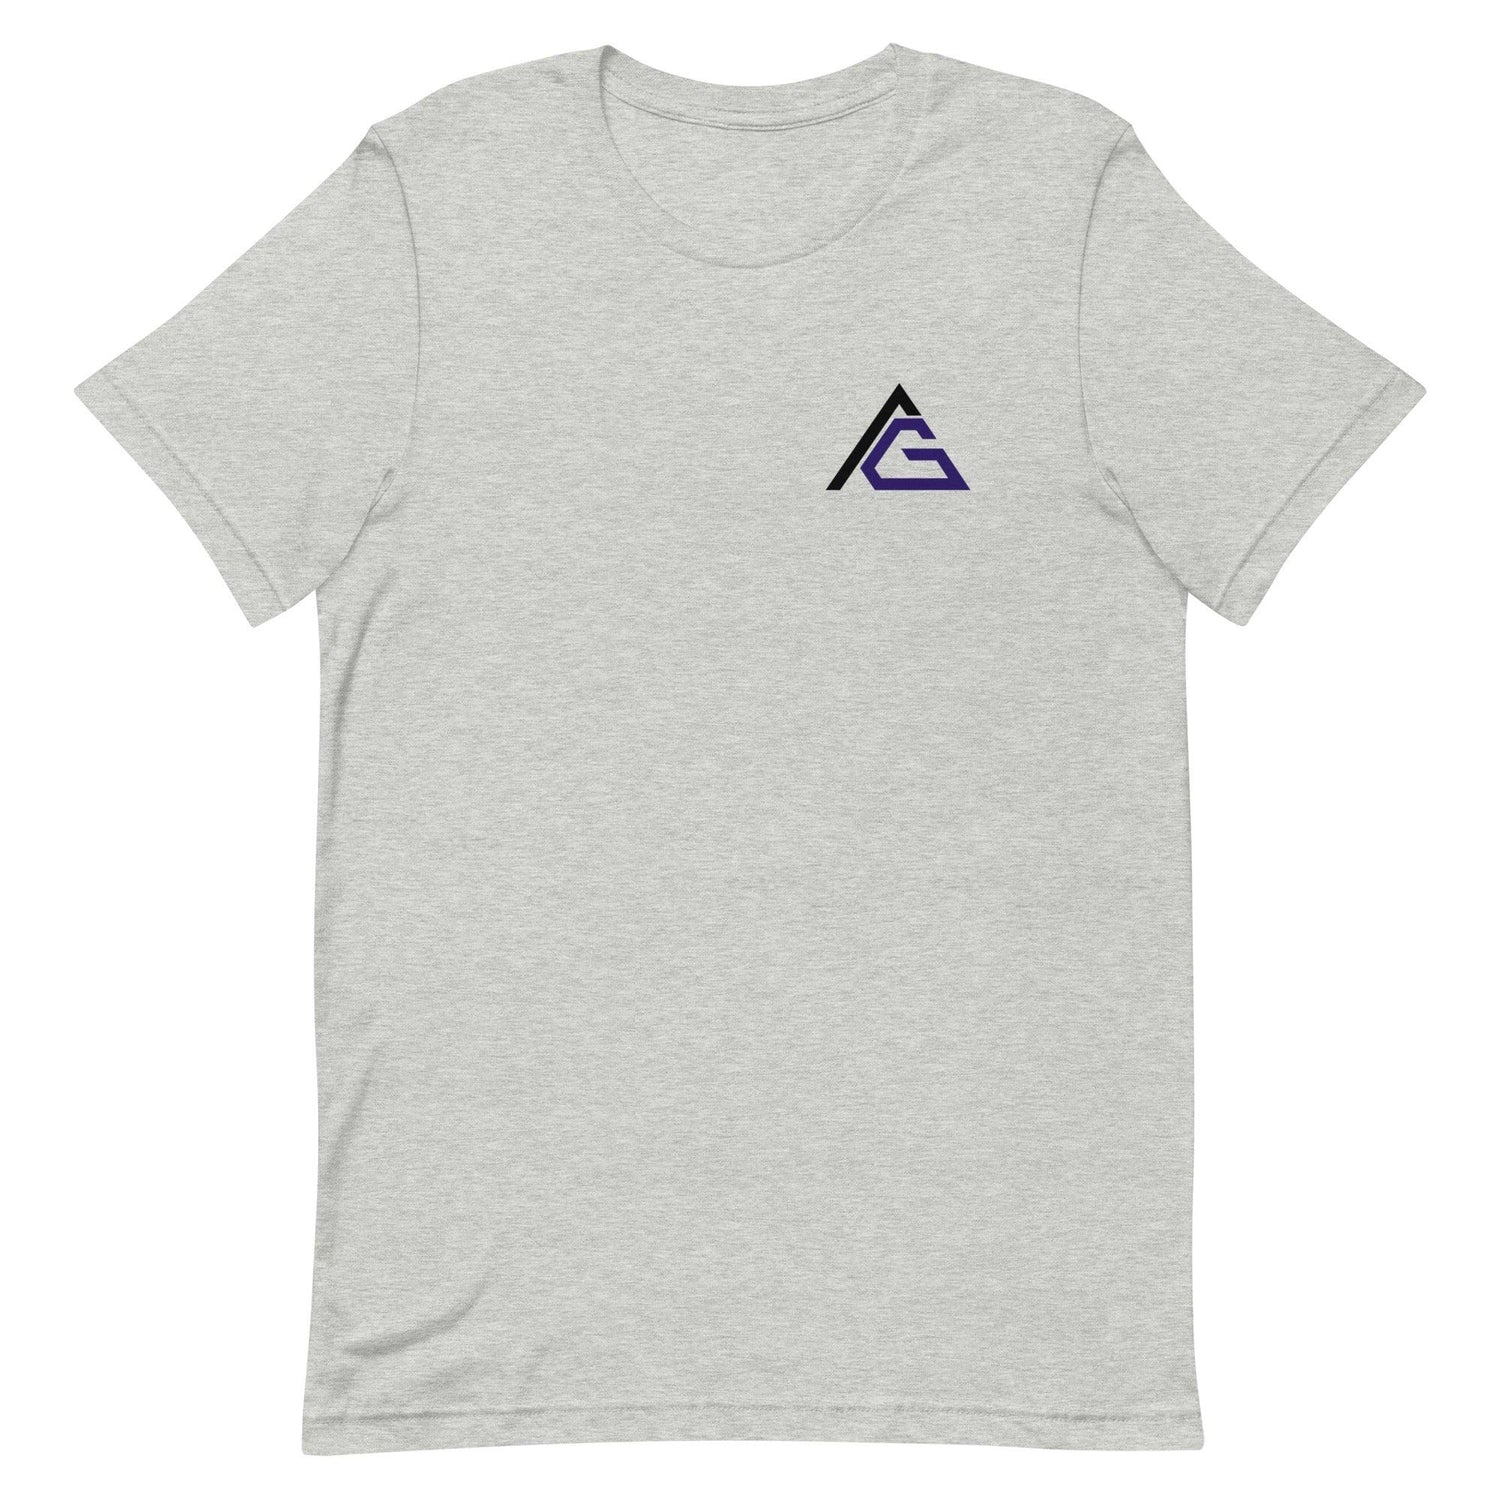 Austin Gomber "Elite" t-shirt - Fan Arch